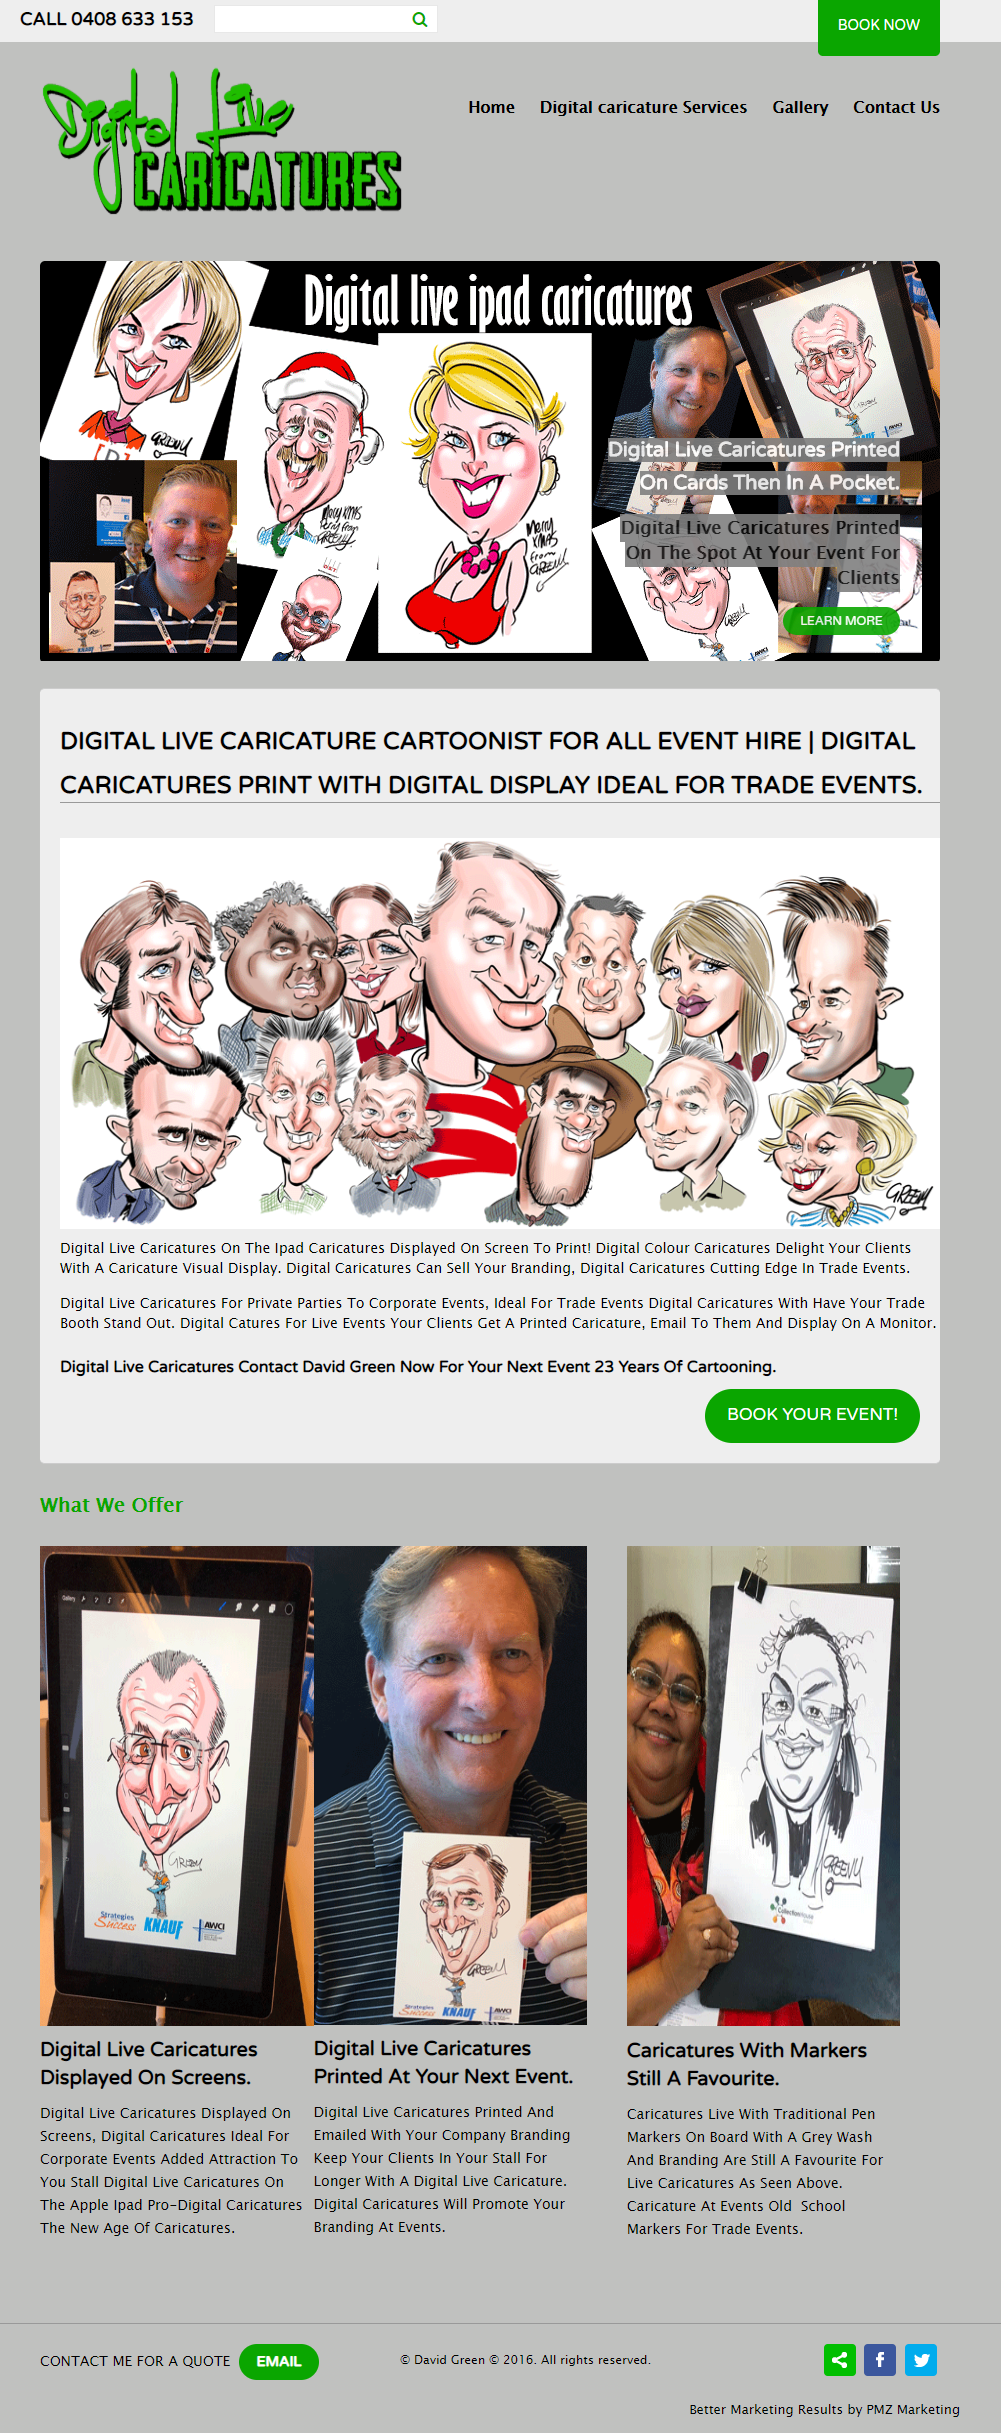 David Green Caricatures :: PMZ Marketing Client